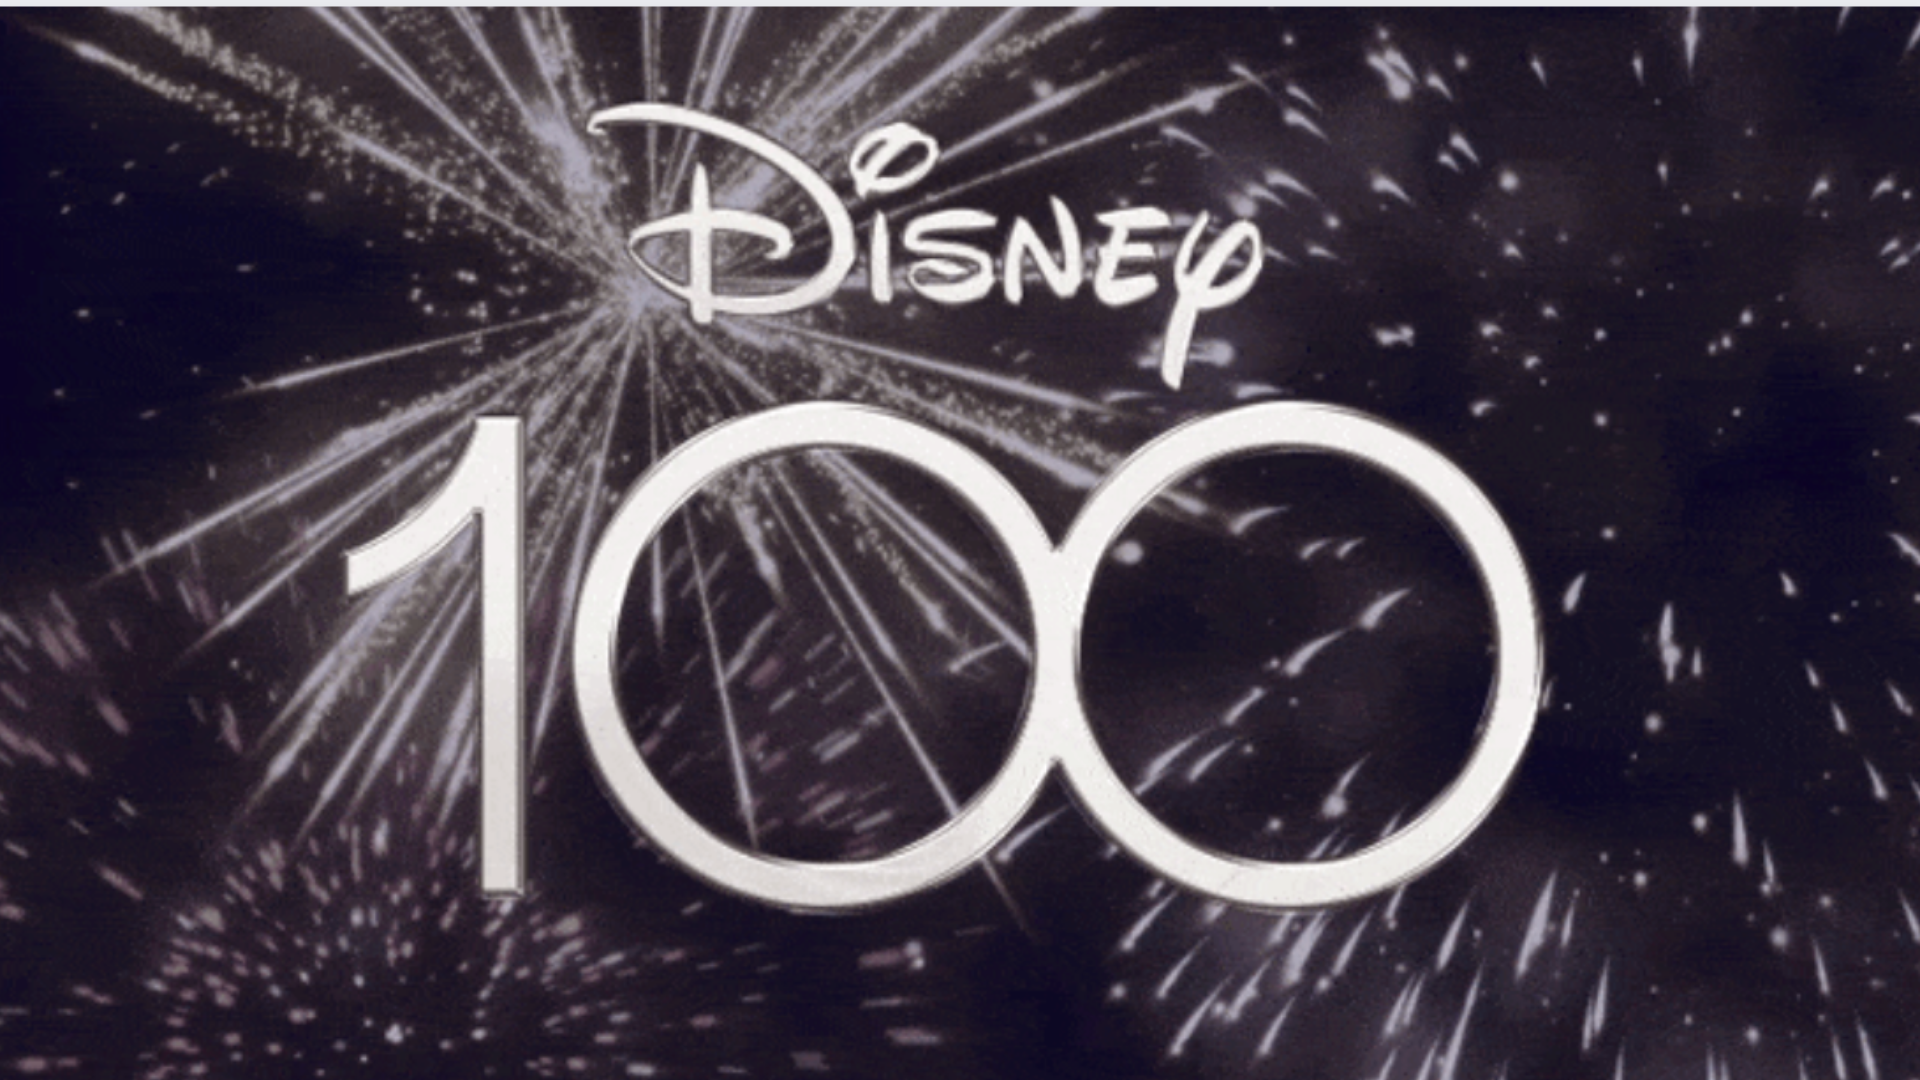 Disney plush 100 minnie in edizione speciale per i 100 anni disney